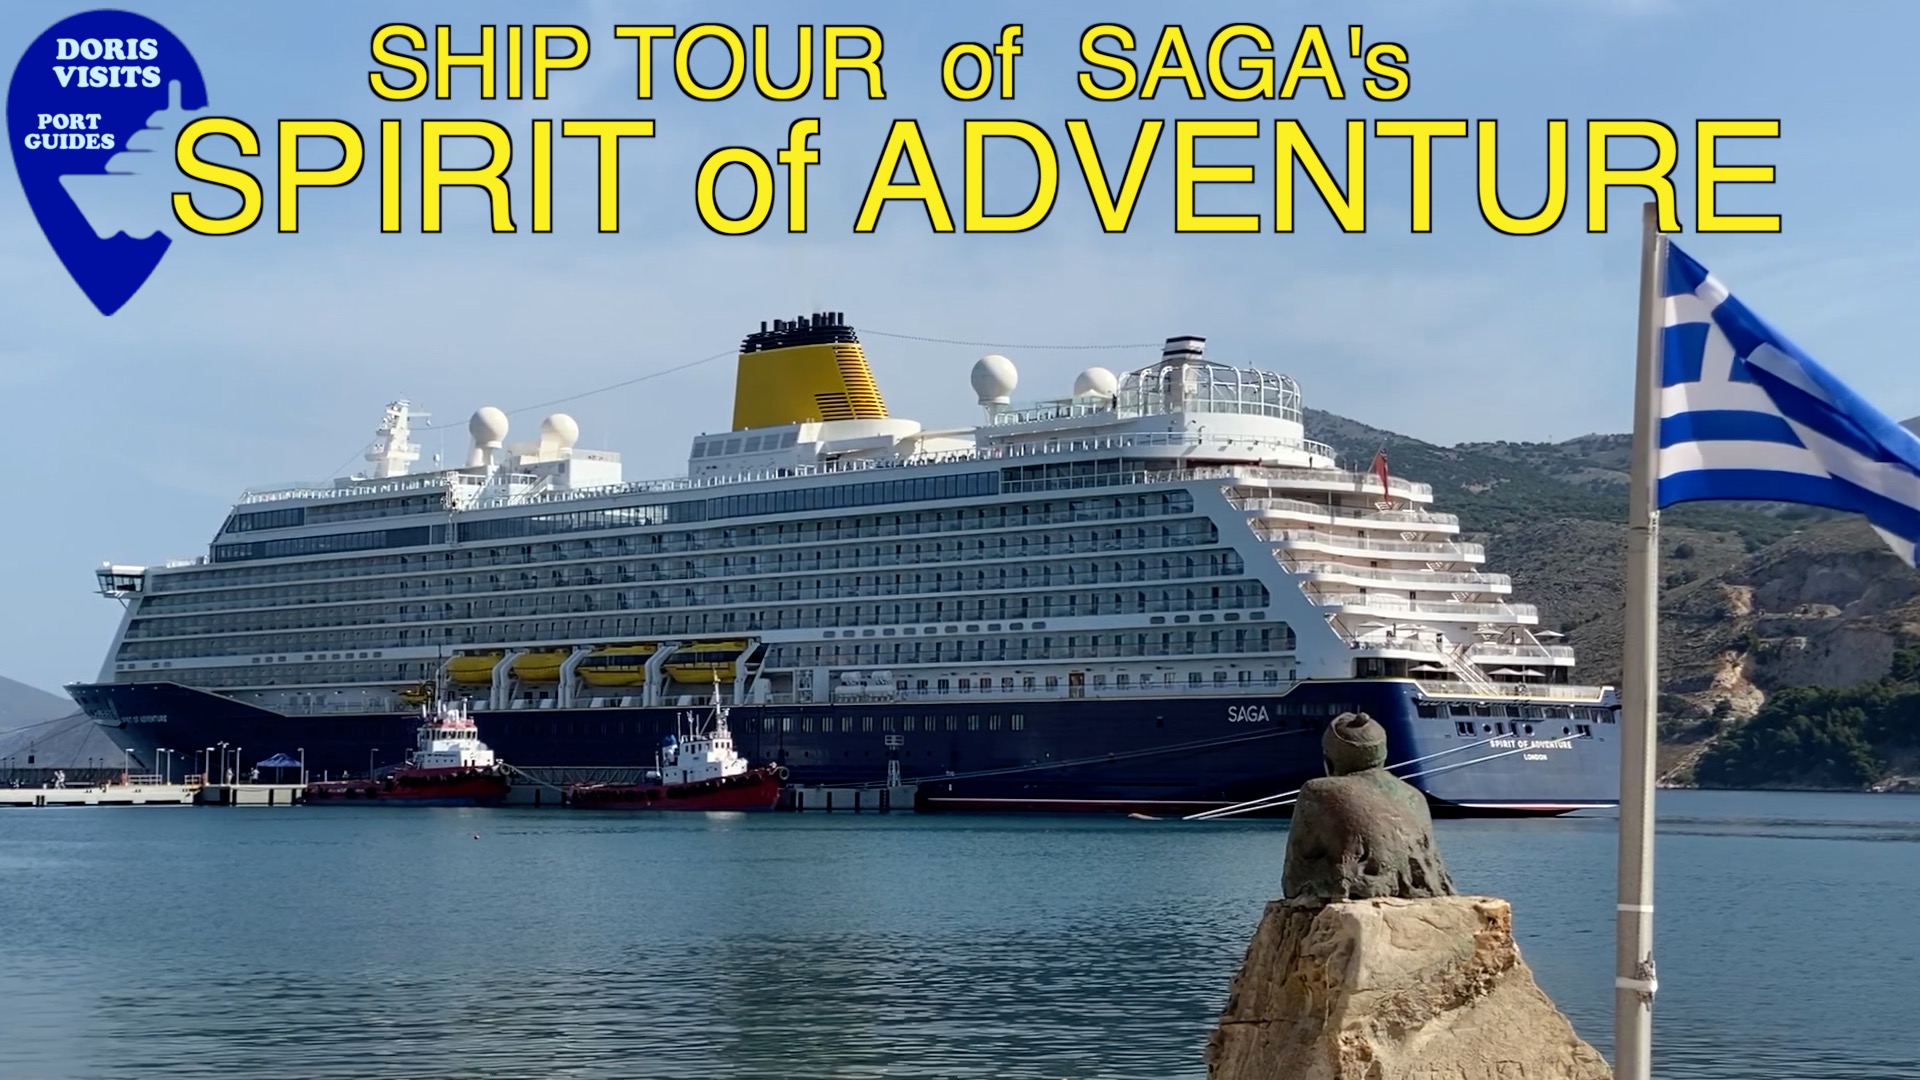 SAGA Spirit of Adventure - ship tour - uCruise with Doris Visits